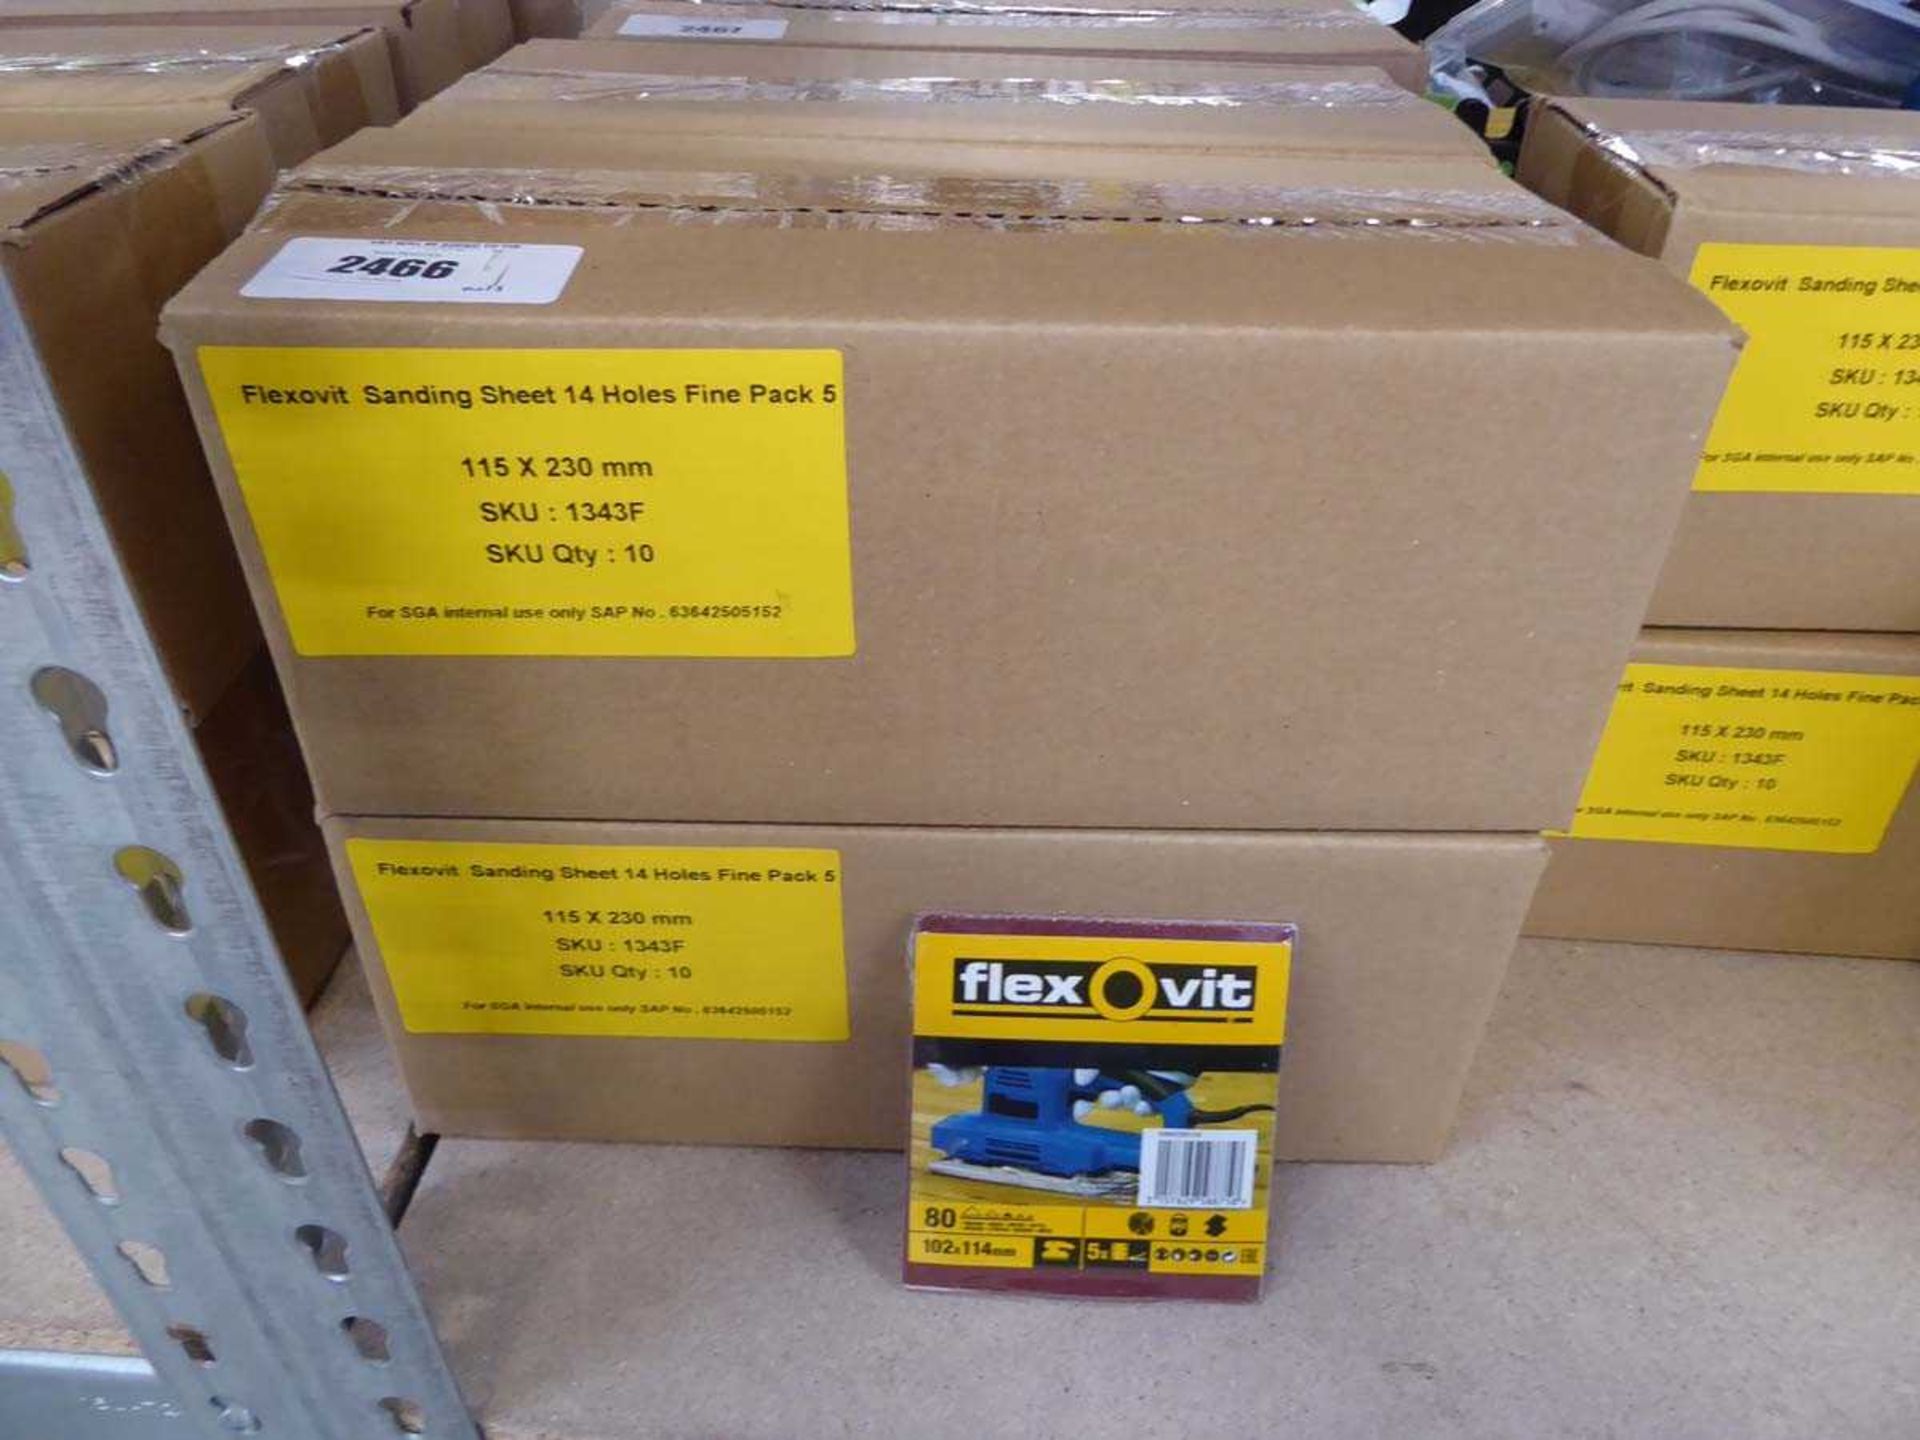 +VAT 4 boxes containing 10 multipacks of 5 Flexovit 14 hole fine sanding sheets - Image 2 of 3